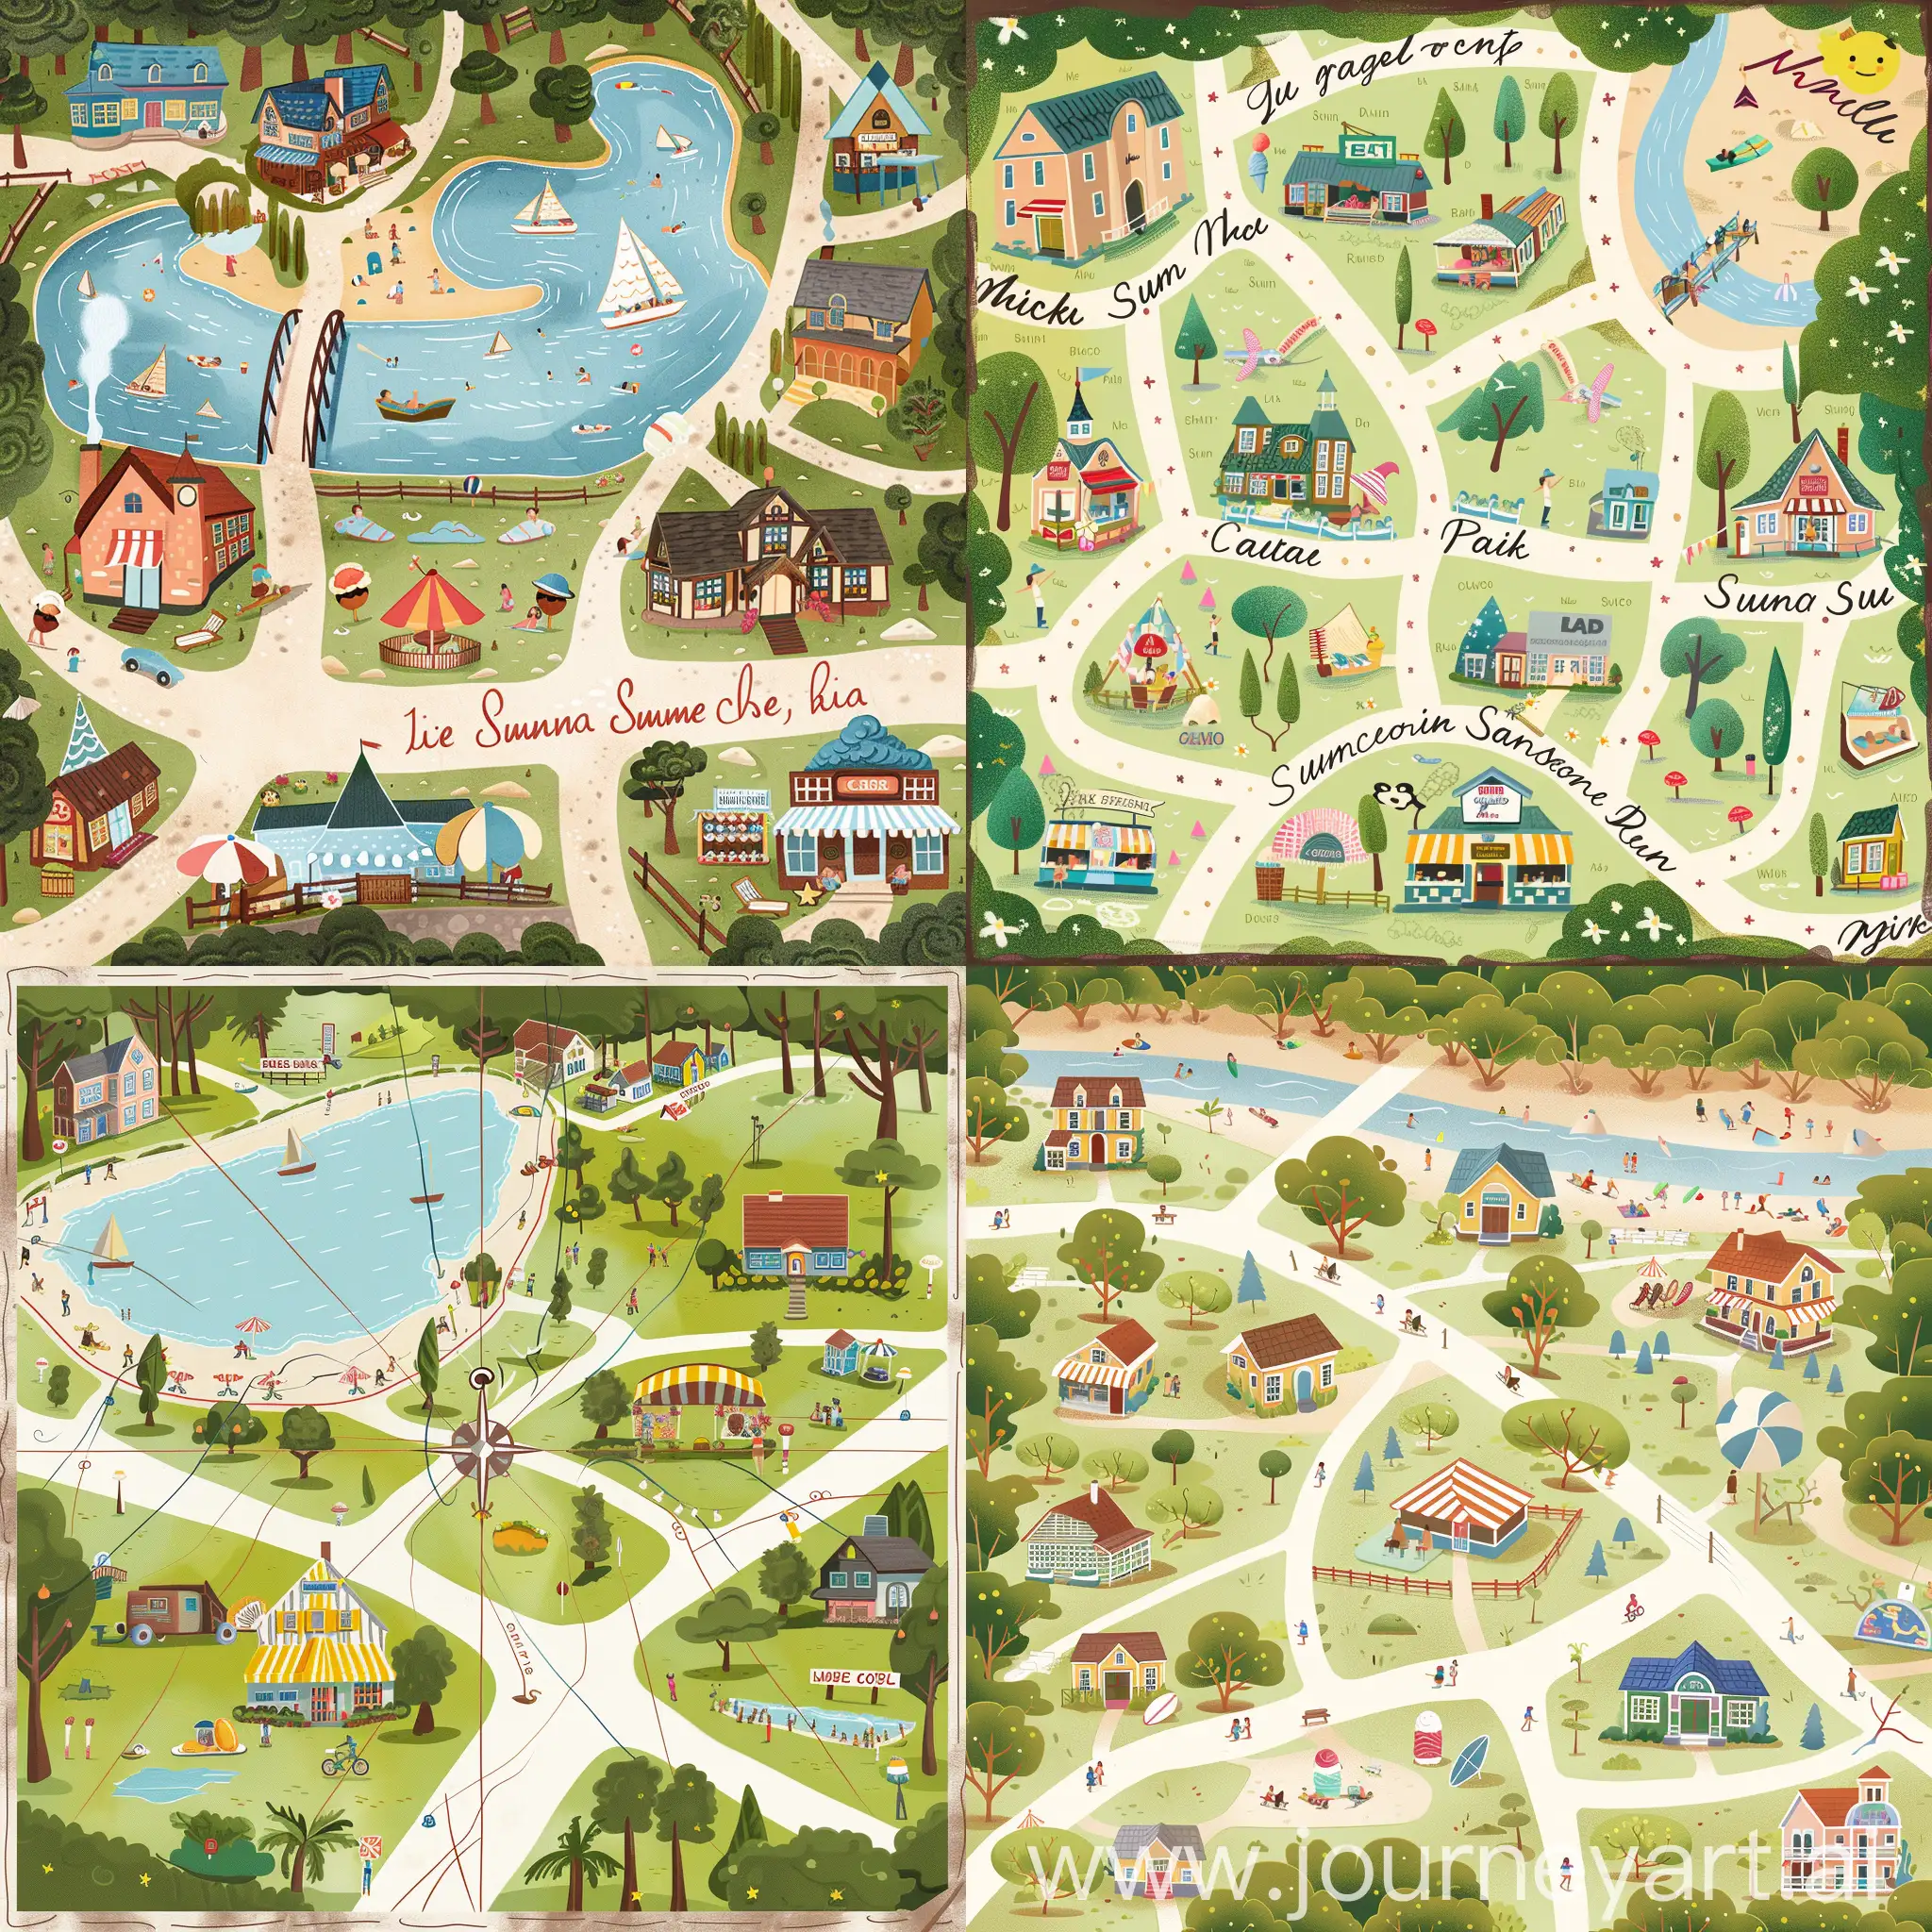 A map of a fictional town with summer landmarks (beach, ice cream shop, park, etc.)